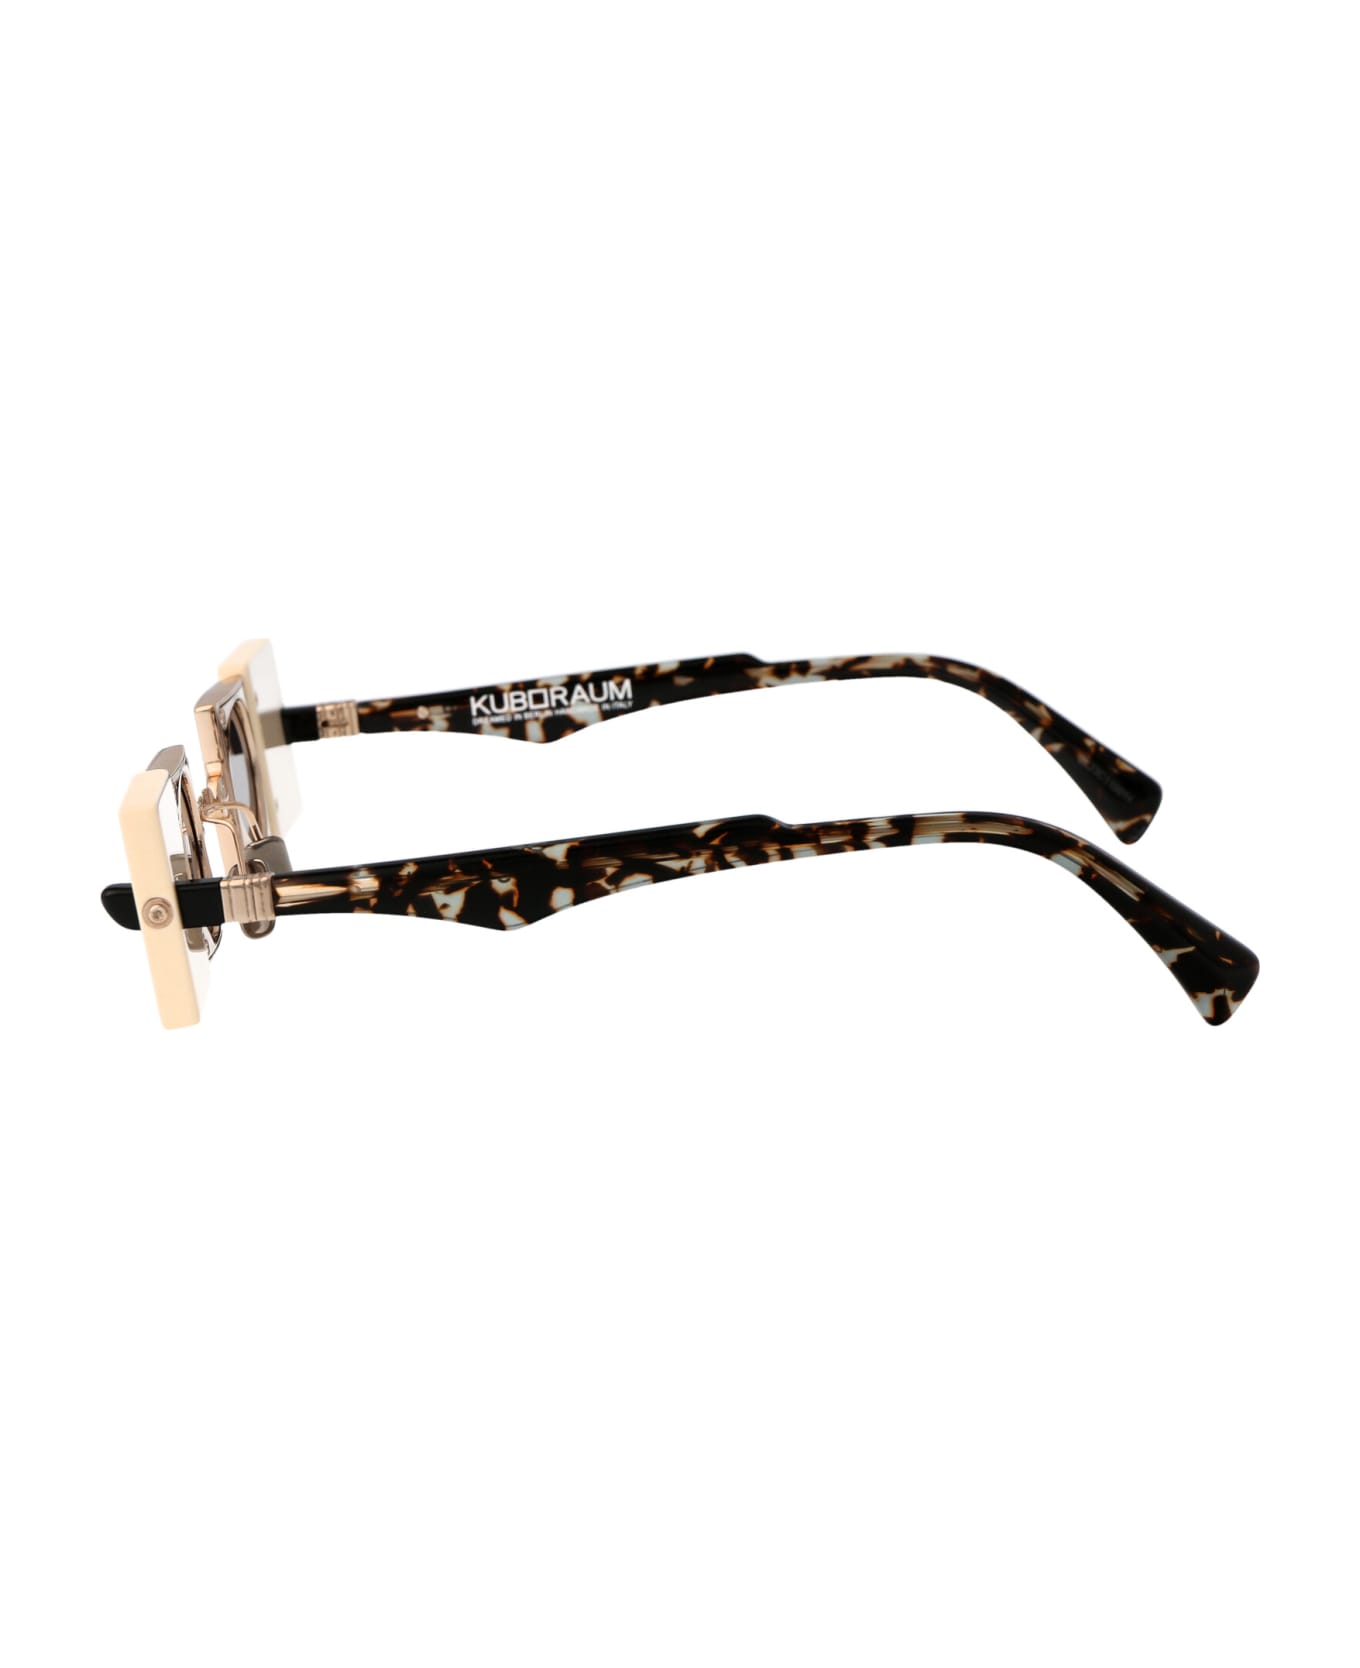 Kuboraum Maske Q50 Sunglasses - PG IY 2GREY サングラス